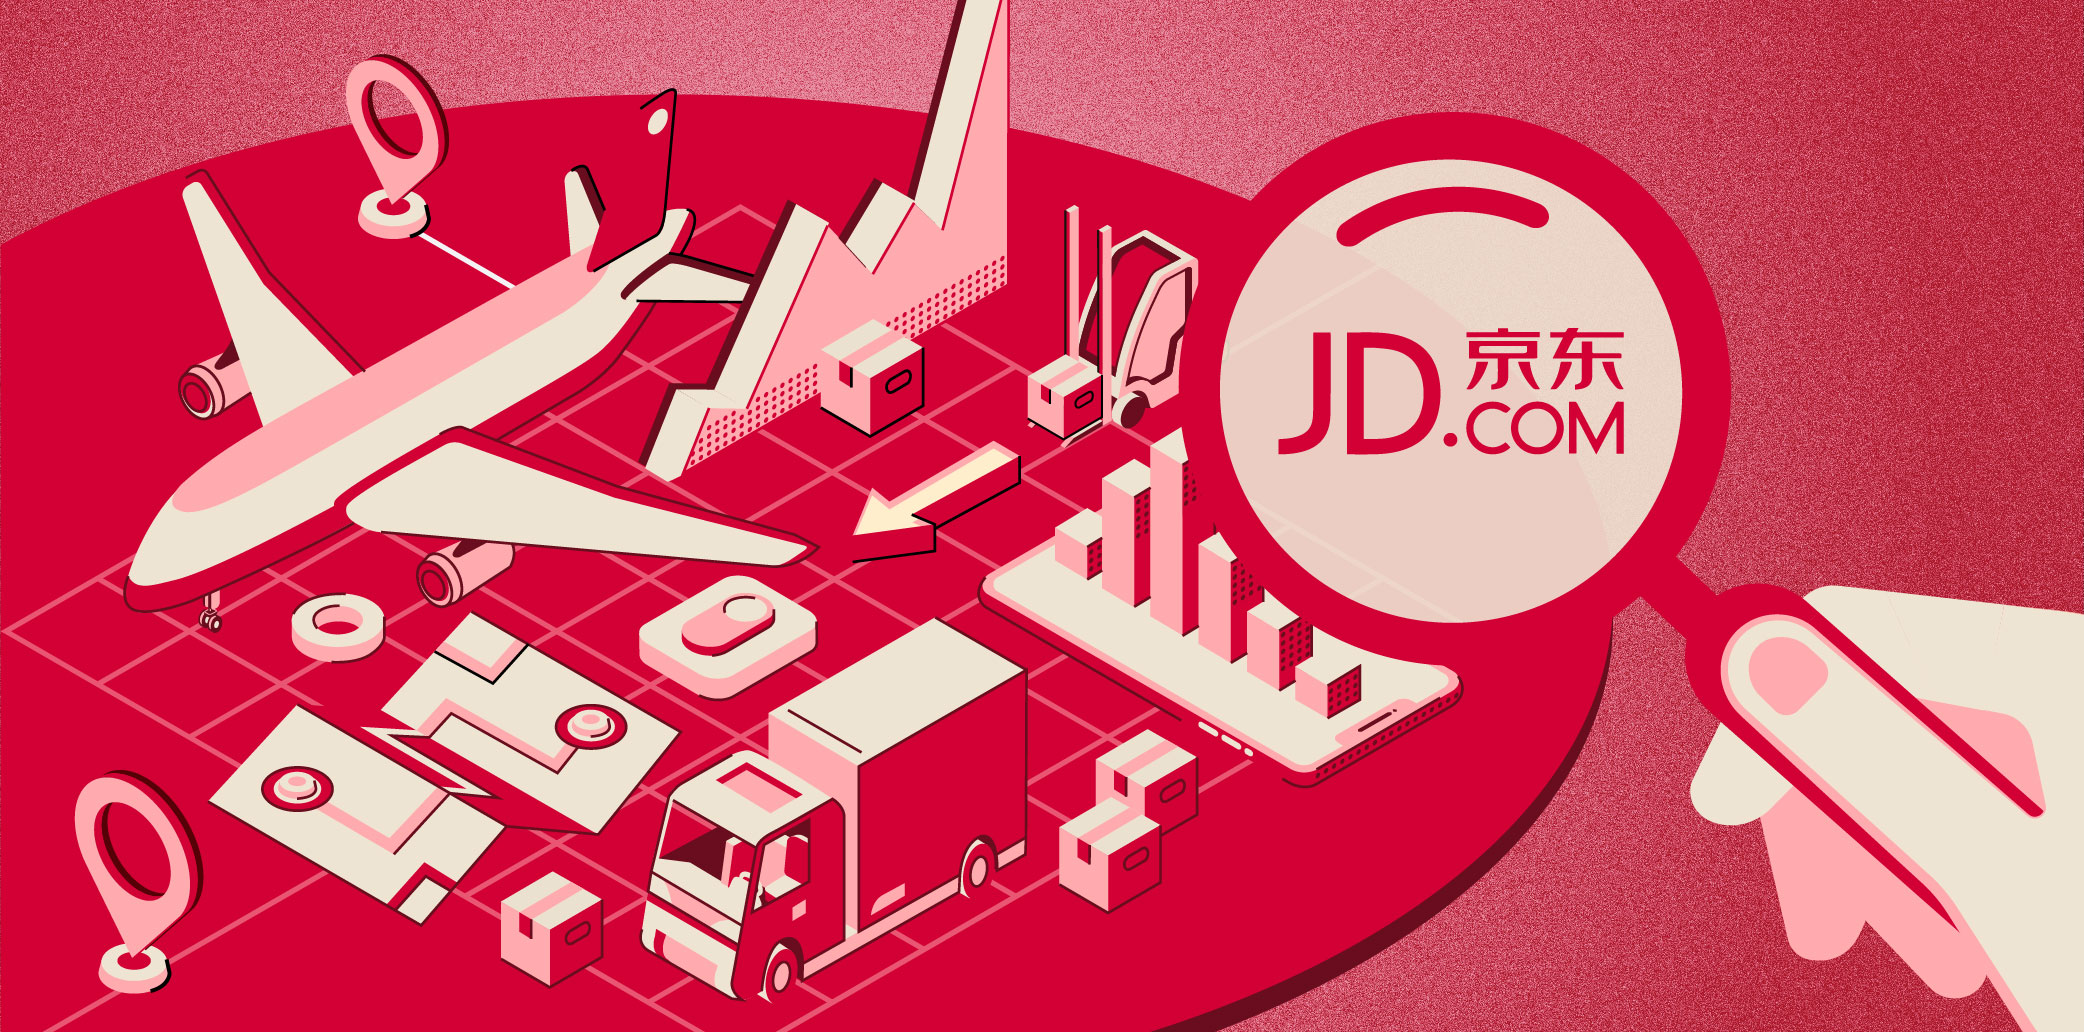 JD.com’s Q2 performance beats expectations as company avoids major regulatory fallout